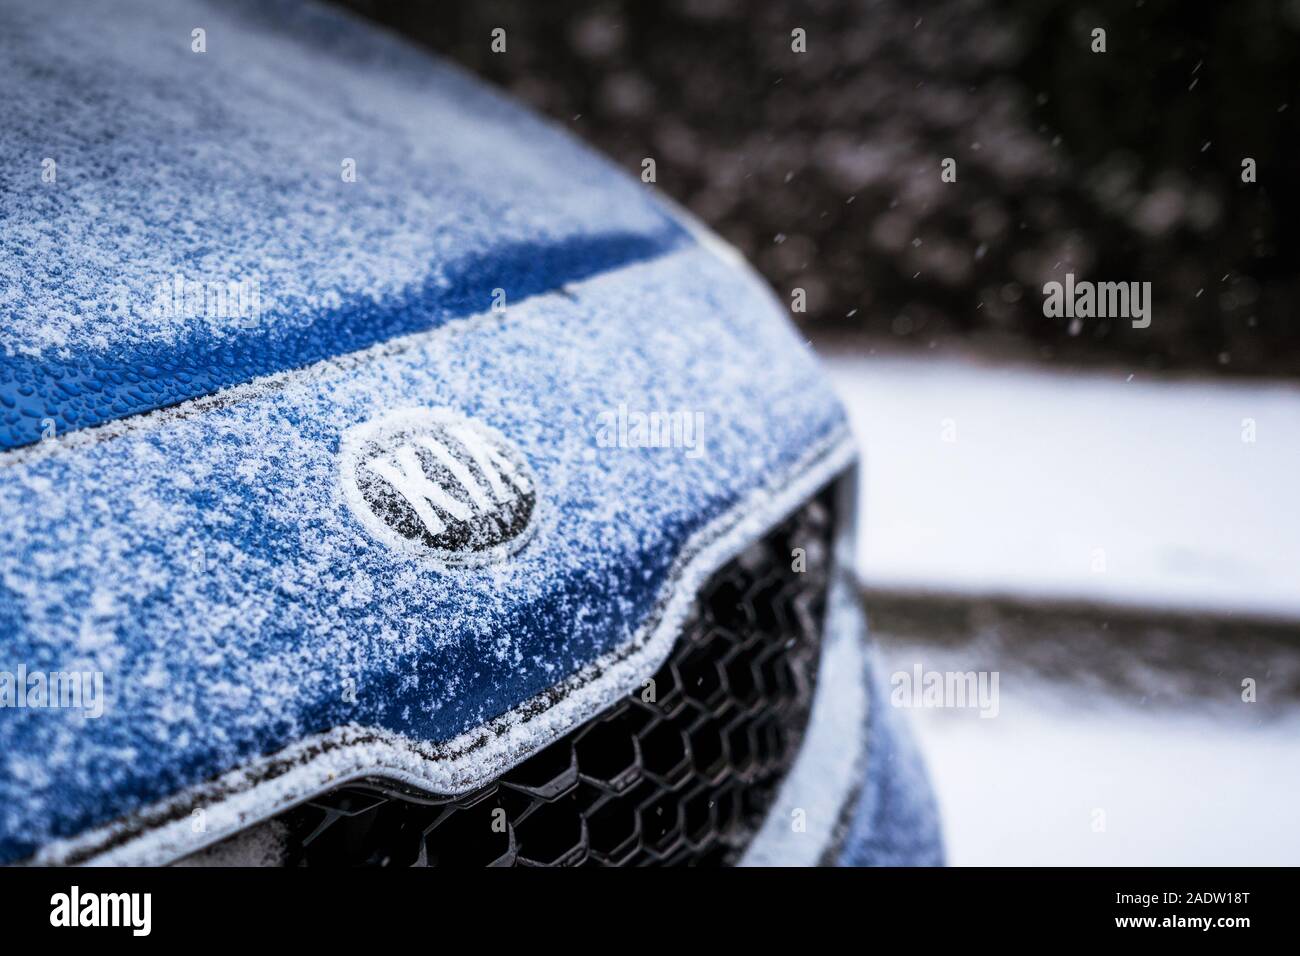 Minsk, Belarus - November 26, 2019: Kia logo in the bonnet of Kia car with snow in winter Stock Photo